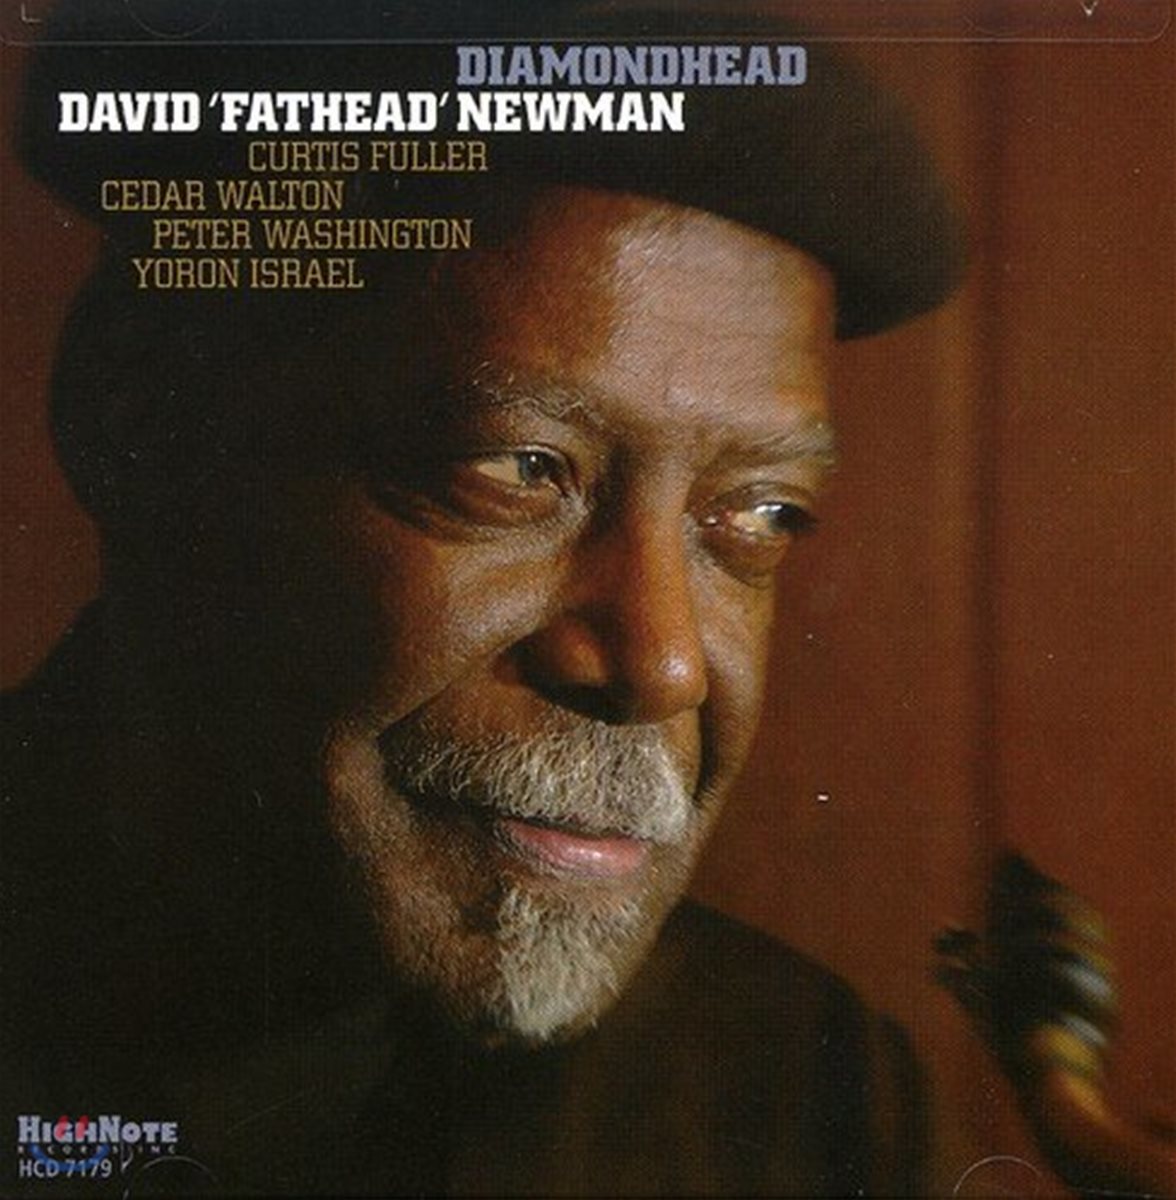 David Fathead Newman &amp; Curtis Fuller - Diamondhead